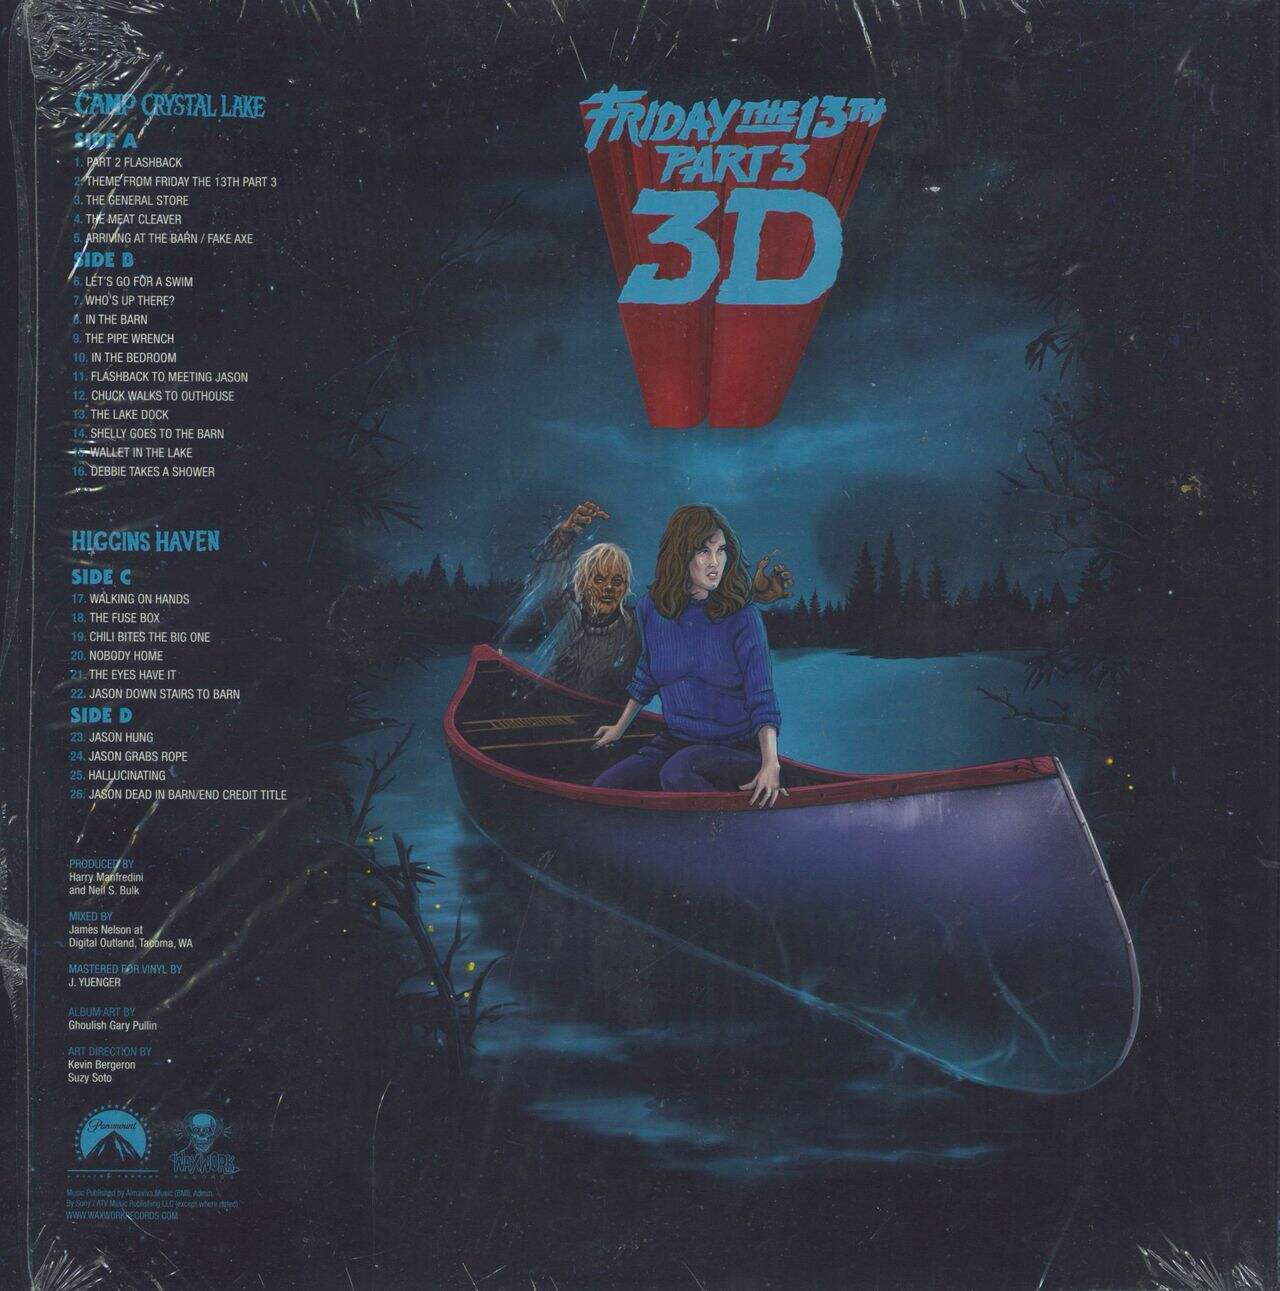 Original Soundtrack Friday The 13th Part 3 3D - White & Red Splatter Vinyl US 2-LP vinyl set